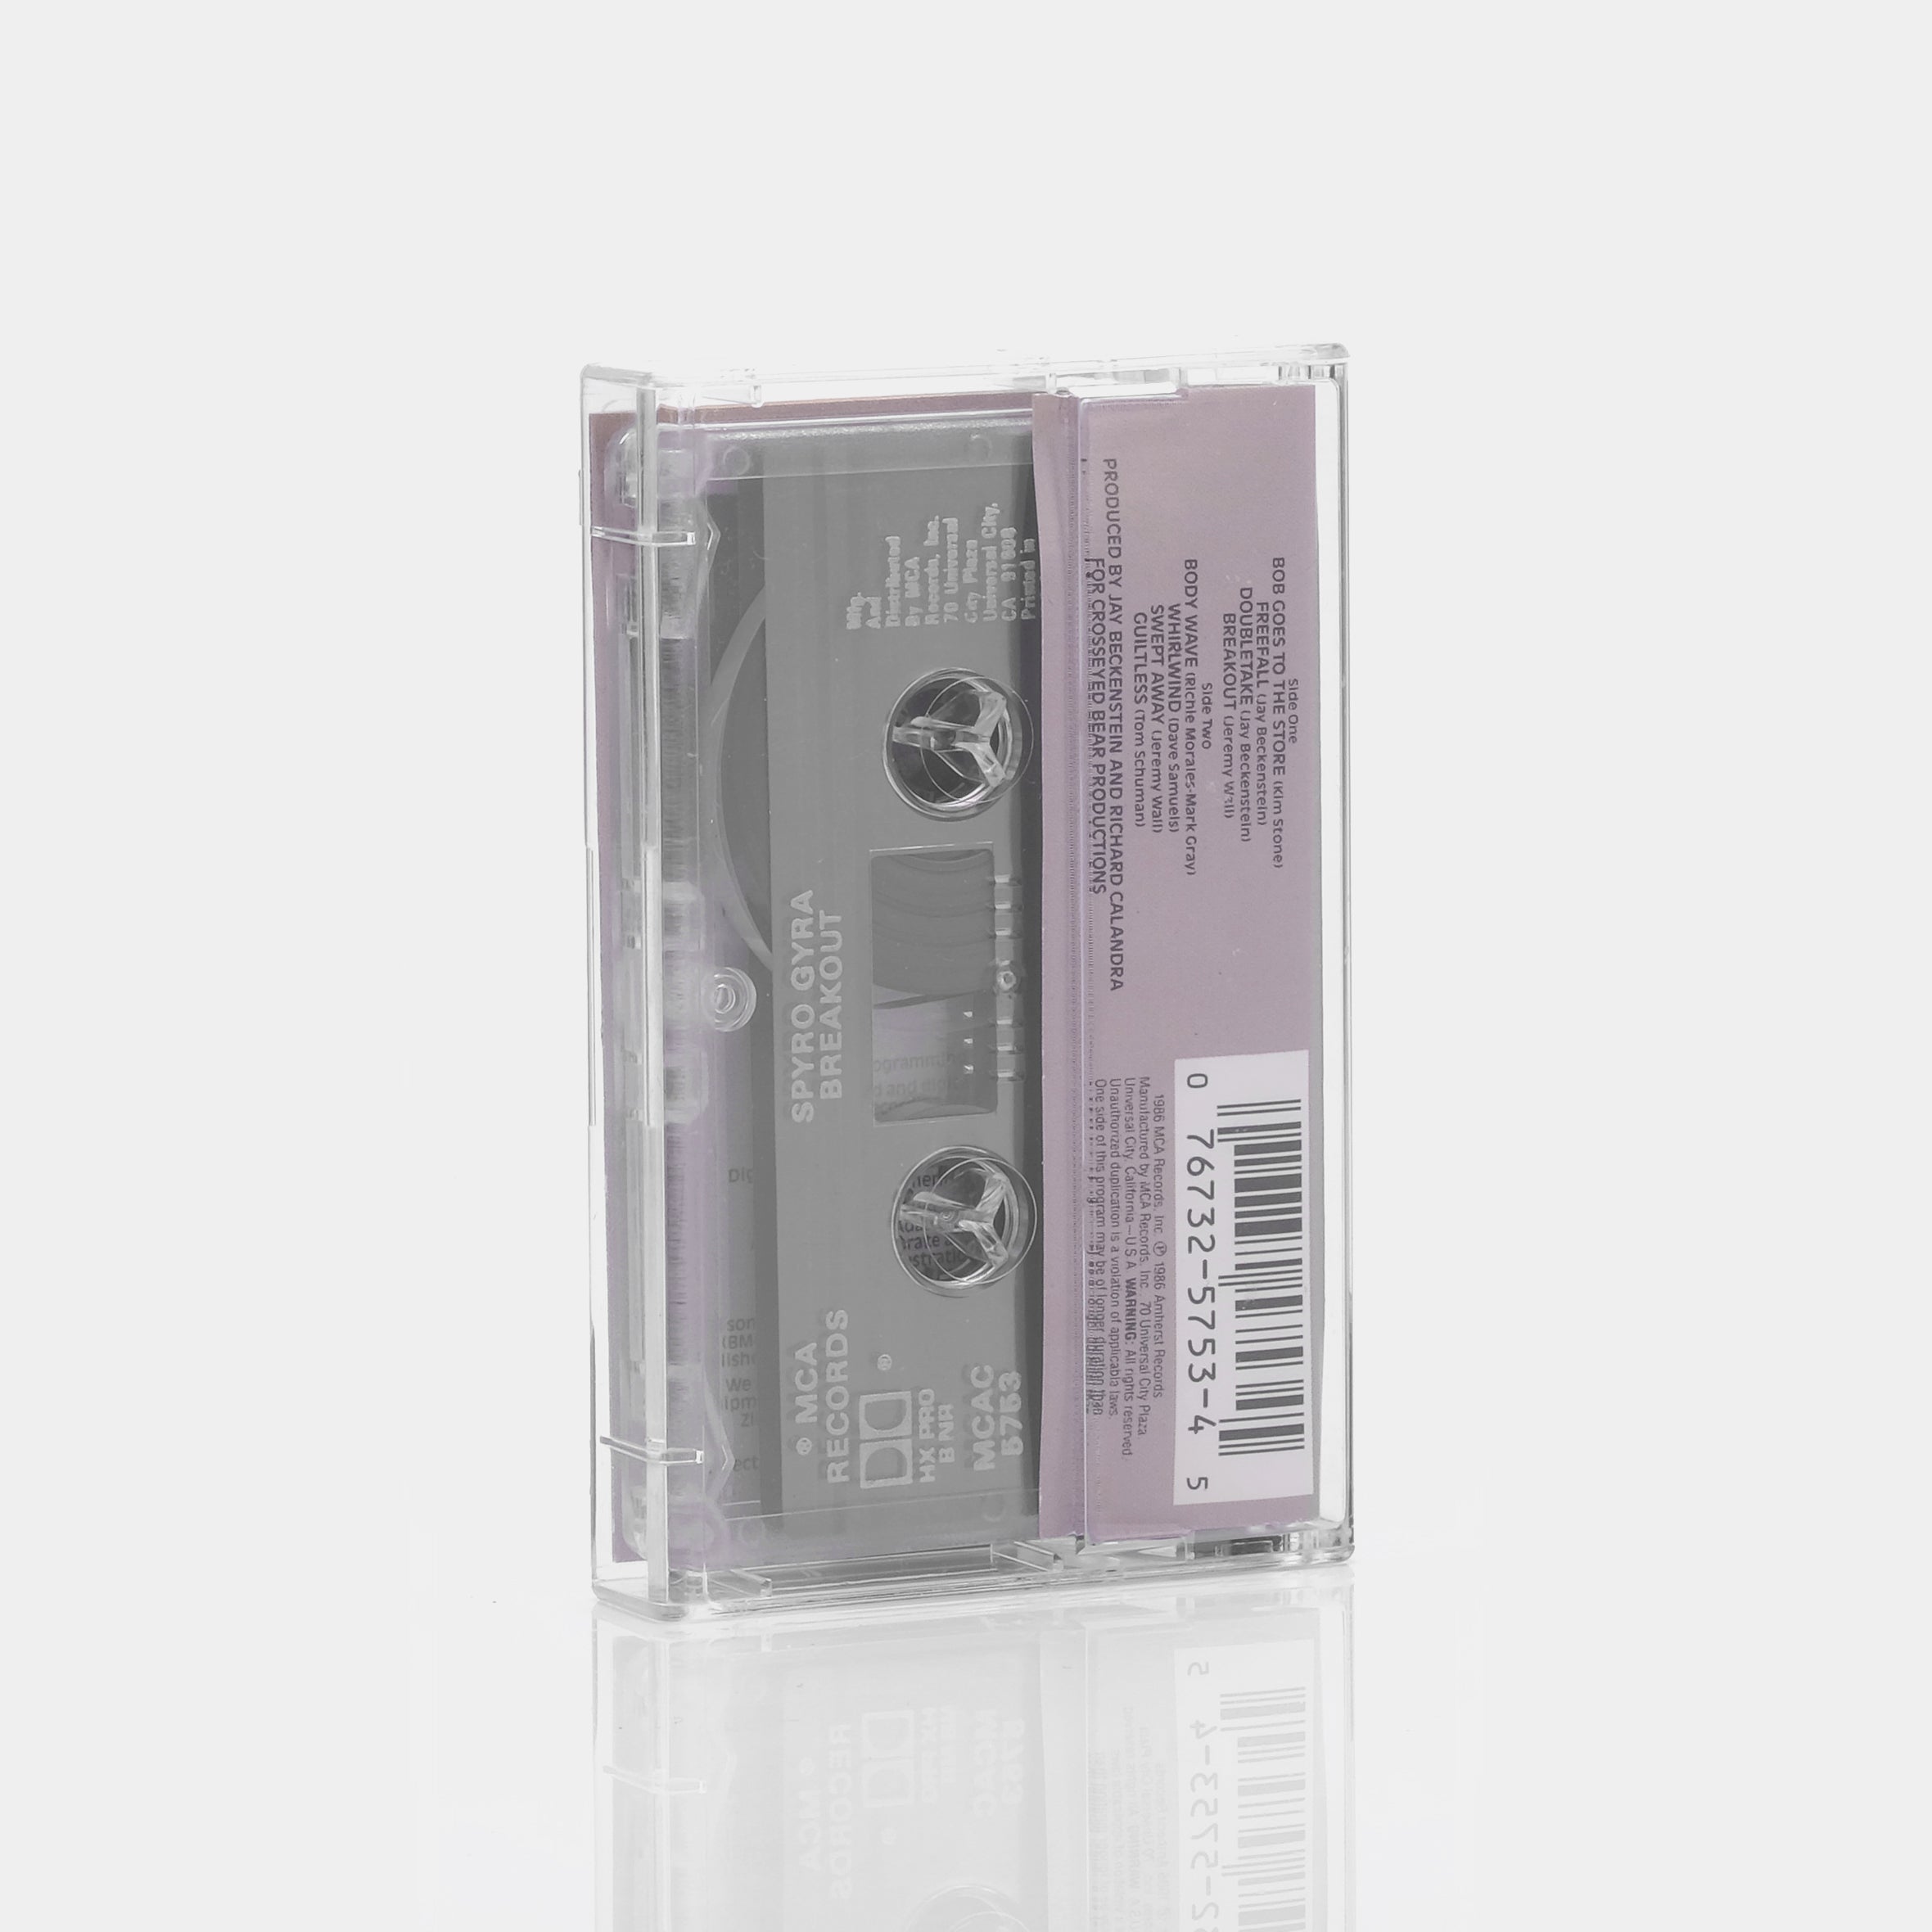 Spyro Gyra - Breakout Cassette Tape